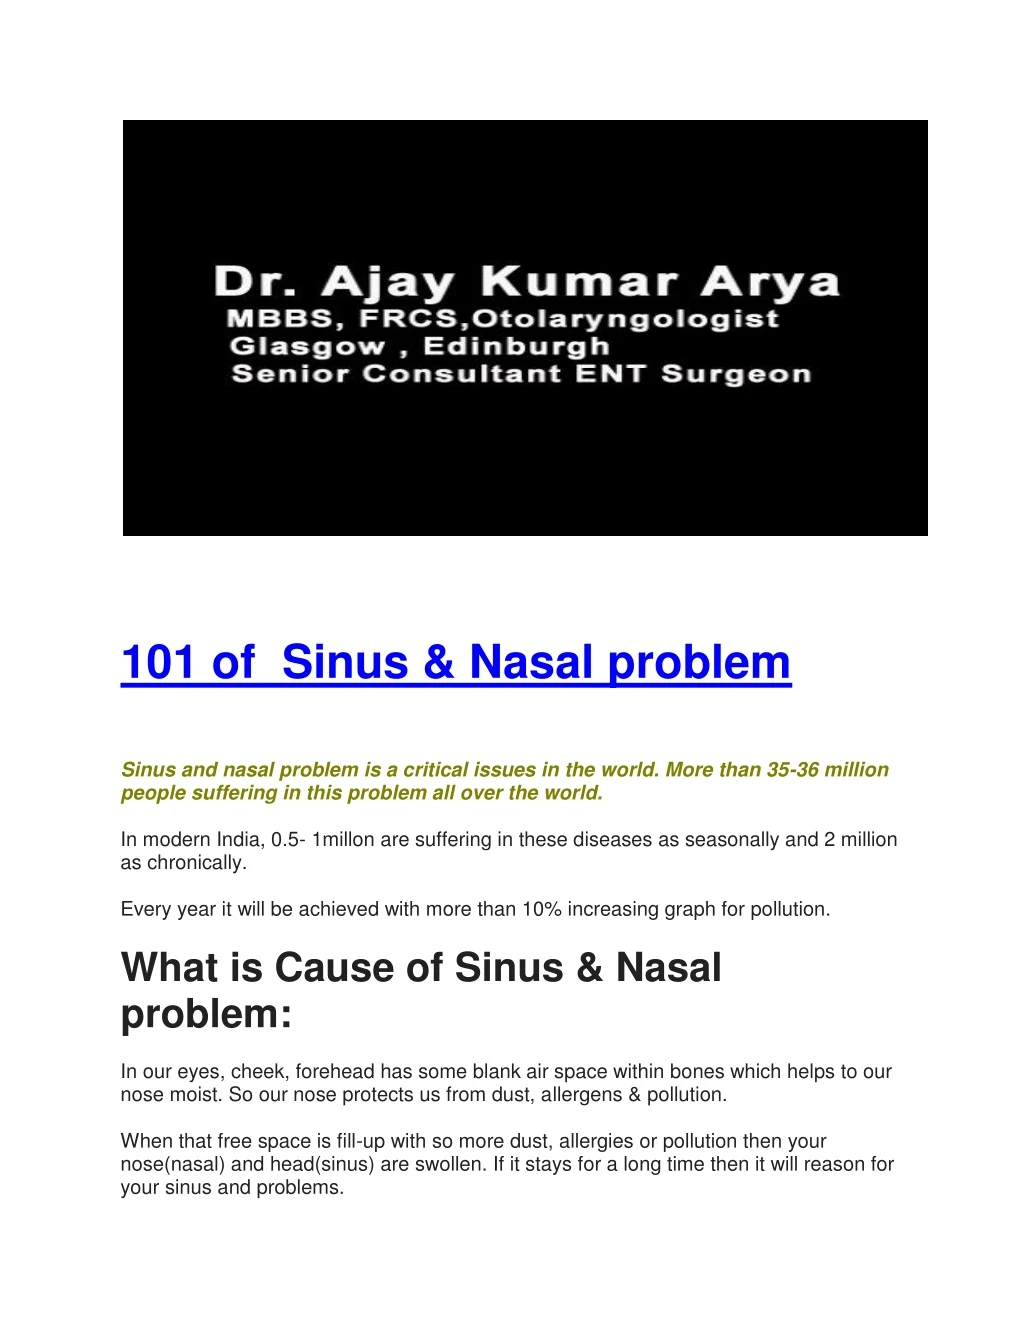 101 of sinus nasal problem